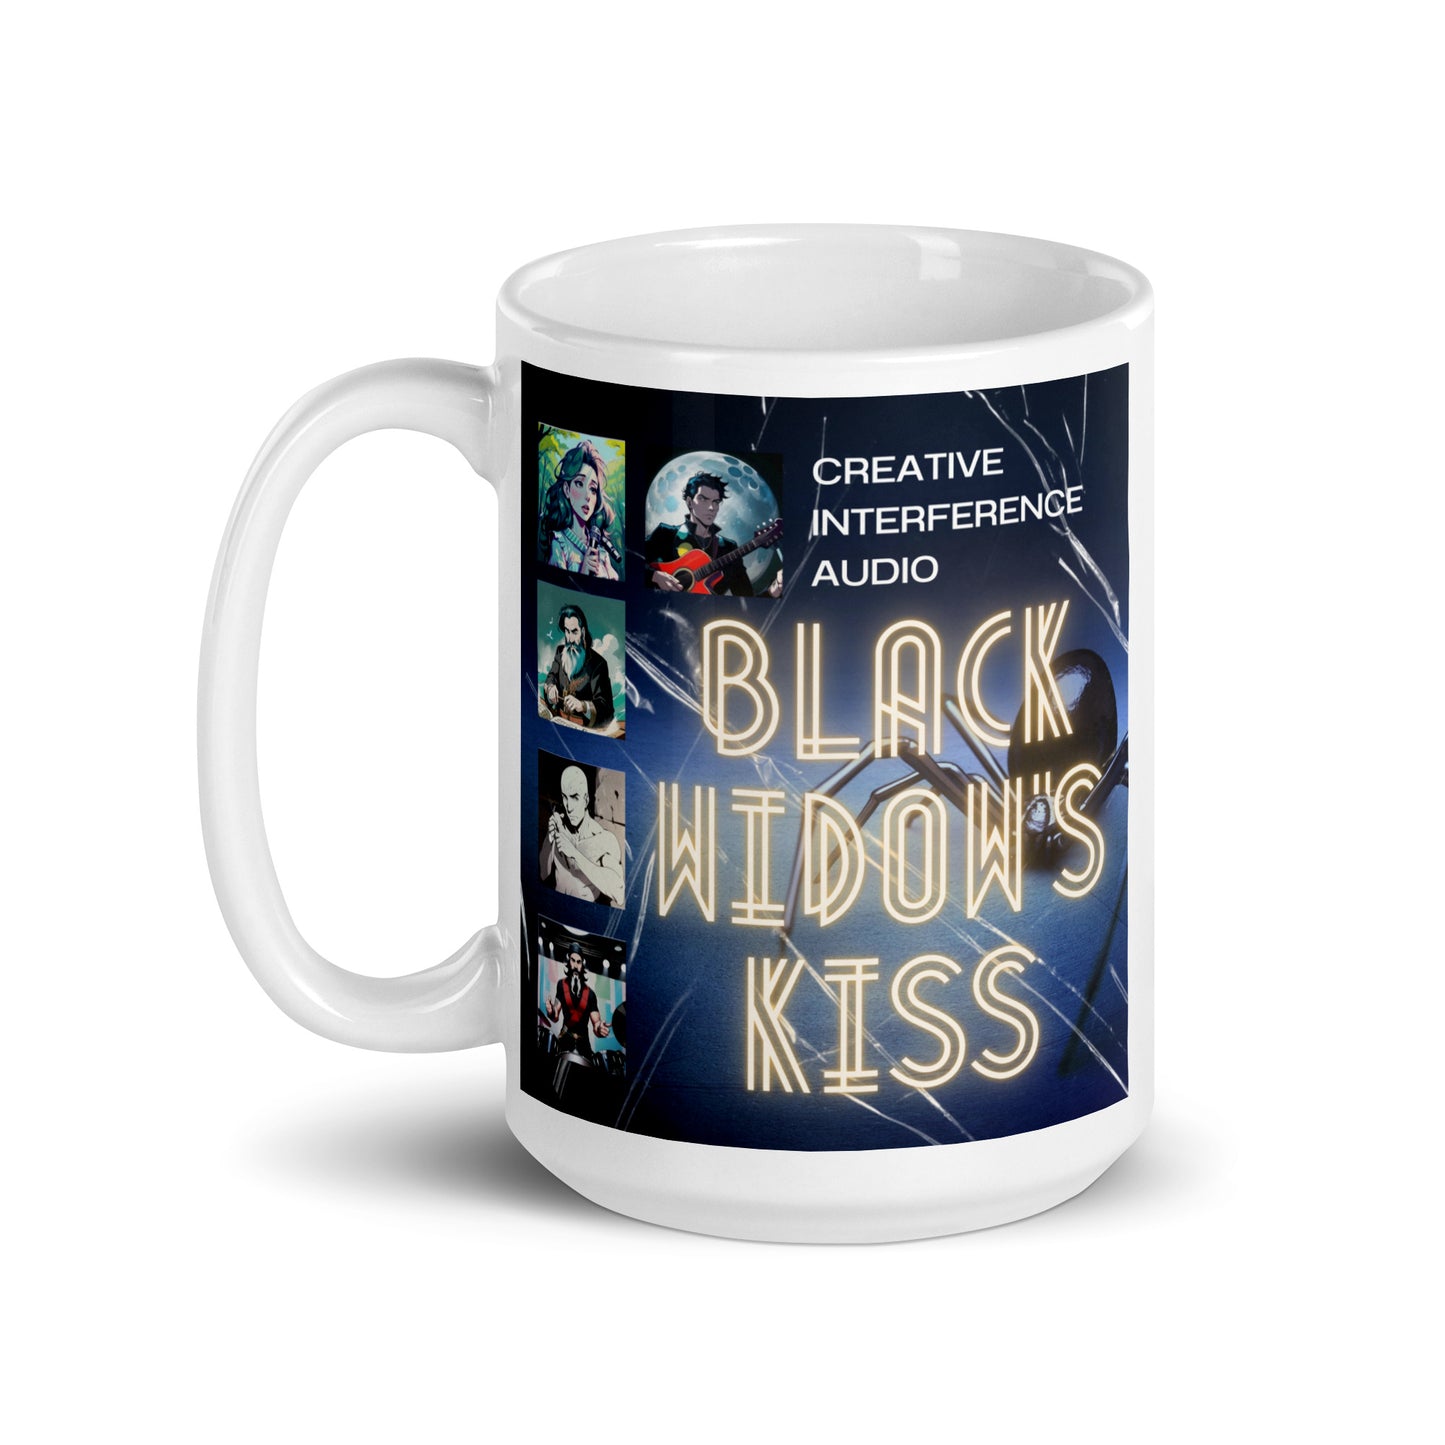 Creative Interference Audio - Black Widow's Kiss Glossy White Mug